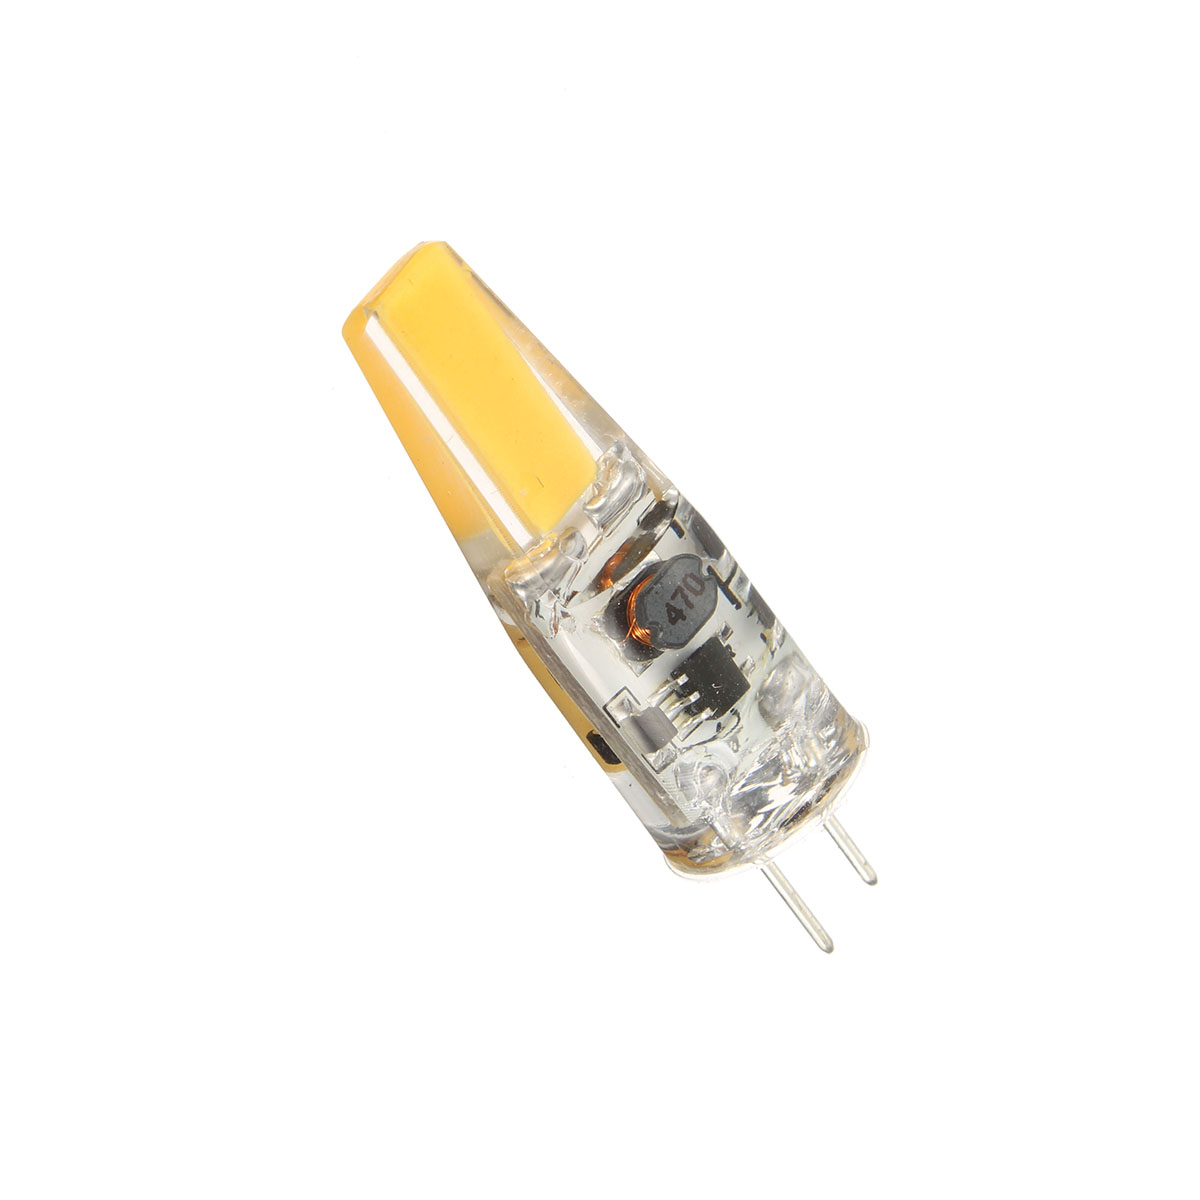 4PCS-G4-2W-Warm-White-COB-LED-Bulb-for-Chandelier-Light-Replace-Halogen-Lamp-DCAC12V-1454470-4